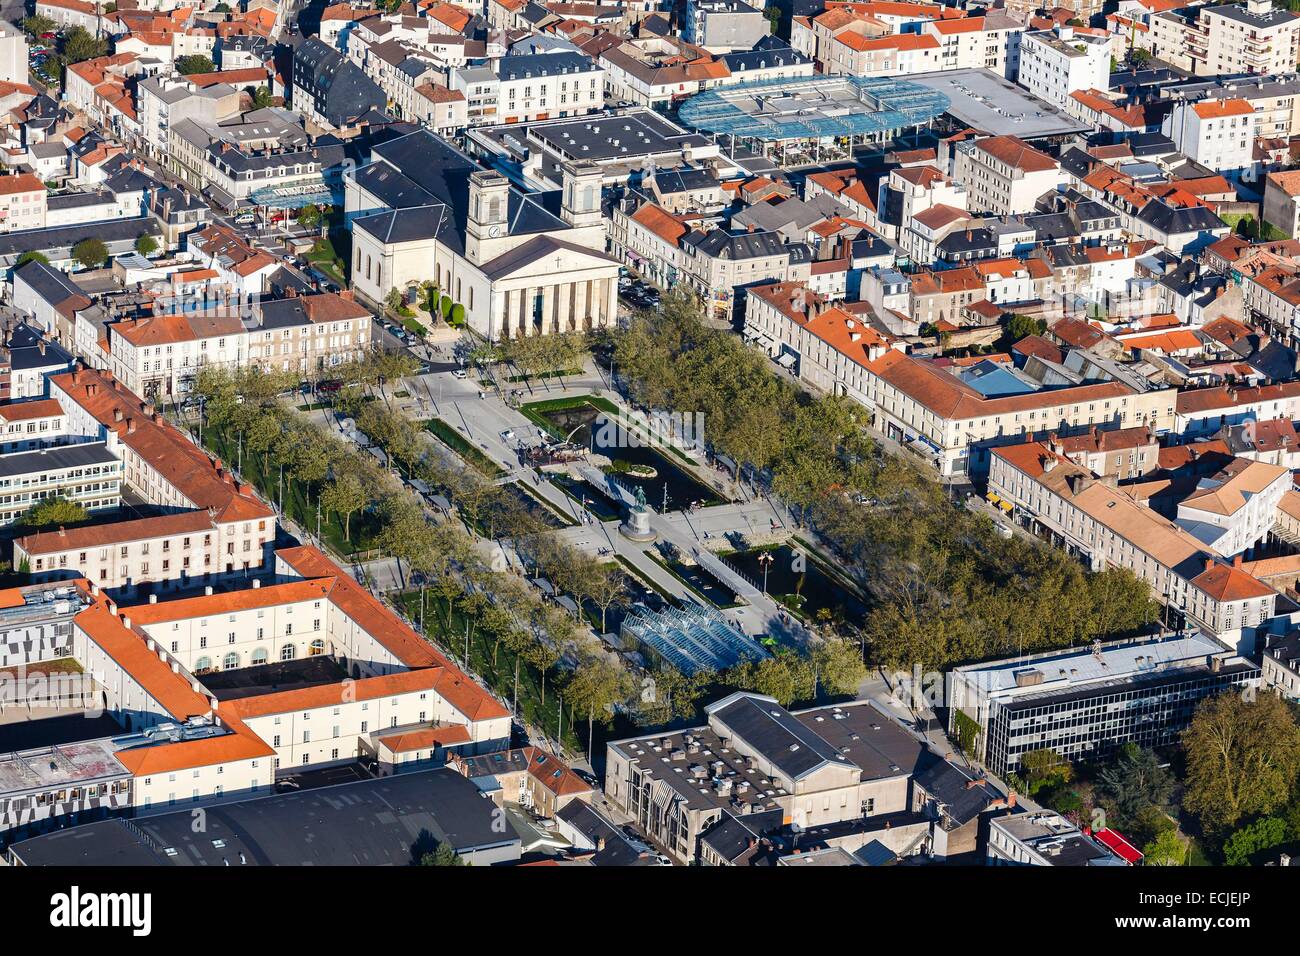 France, Vendee, La Roche sur Yon, Napoleon square and Saint Louis church (aerial view) Stock Photo